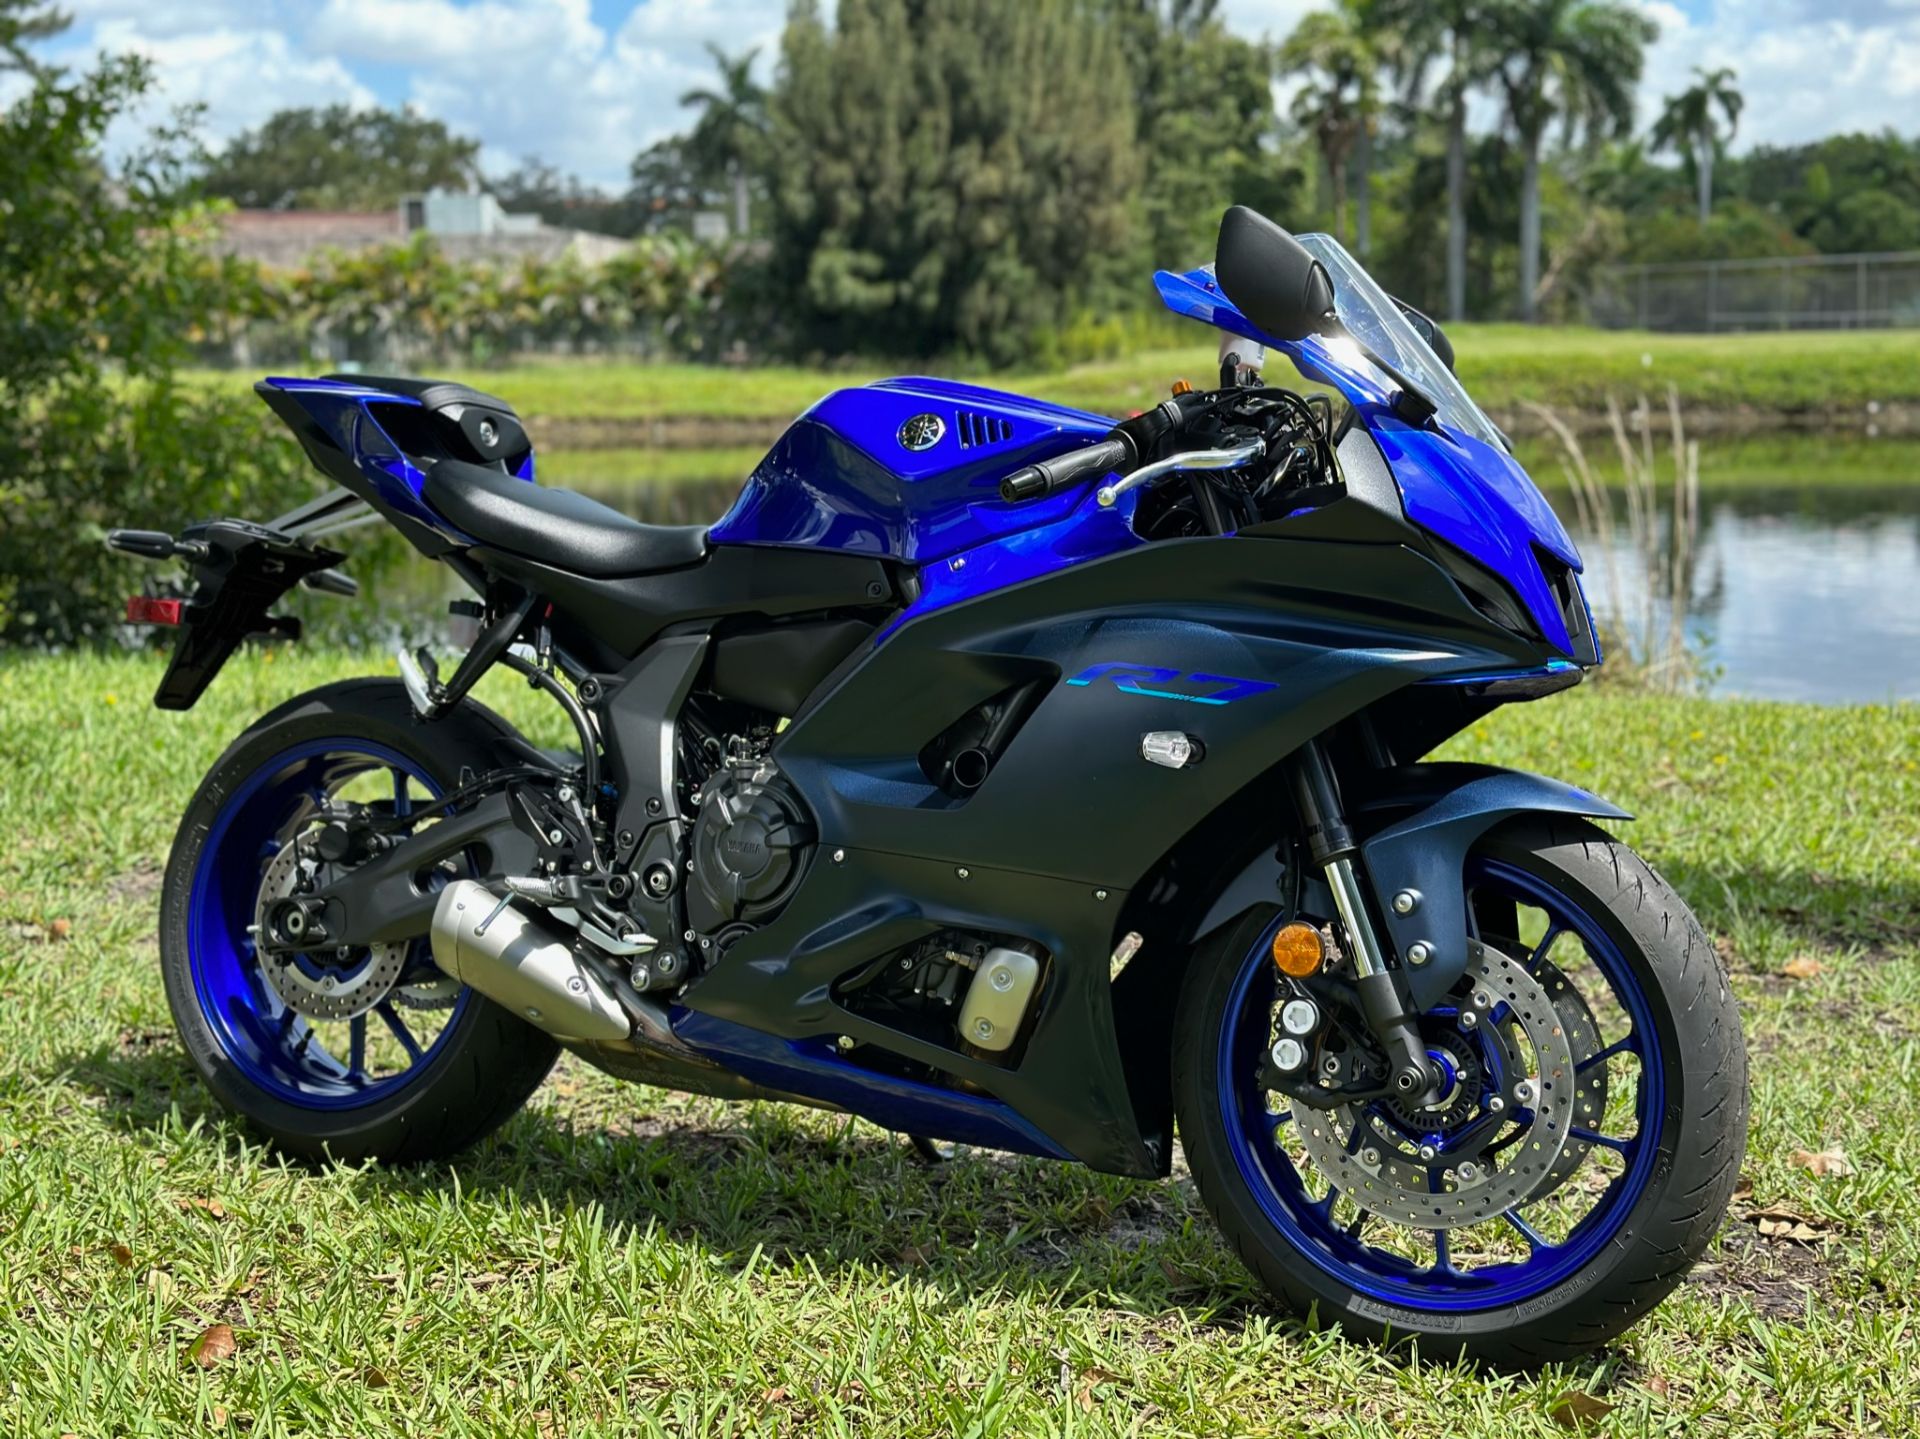 2022 Yamaha YZF-R7 in North Miami Beach, Florida - Photo 1